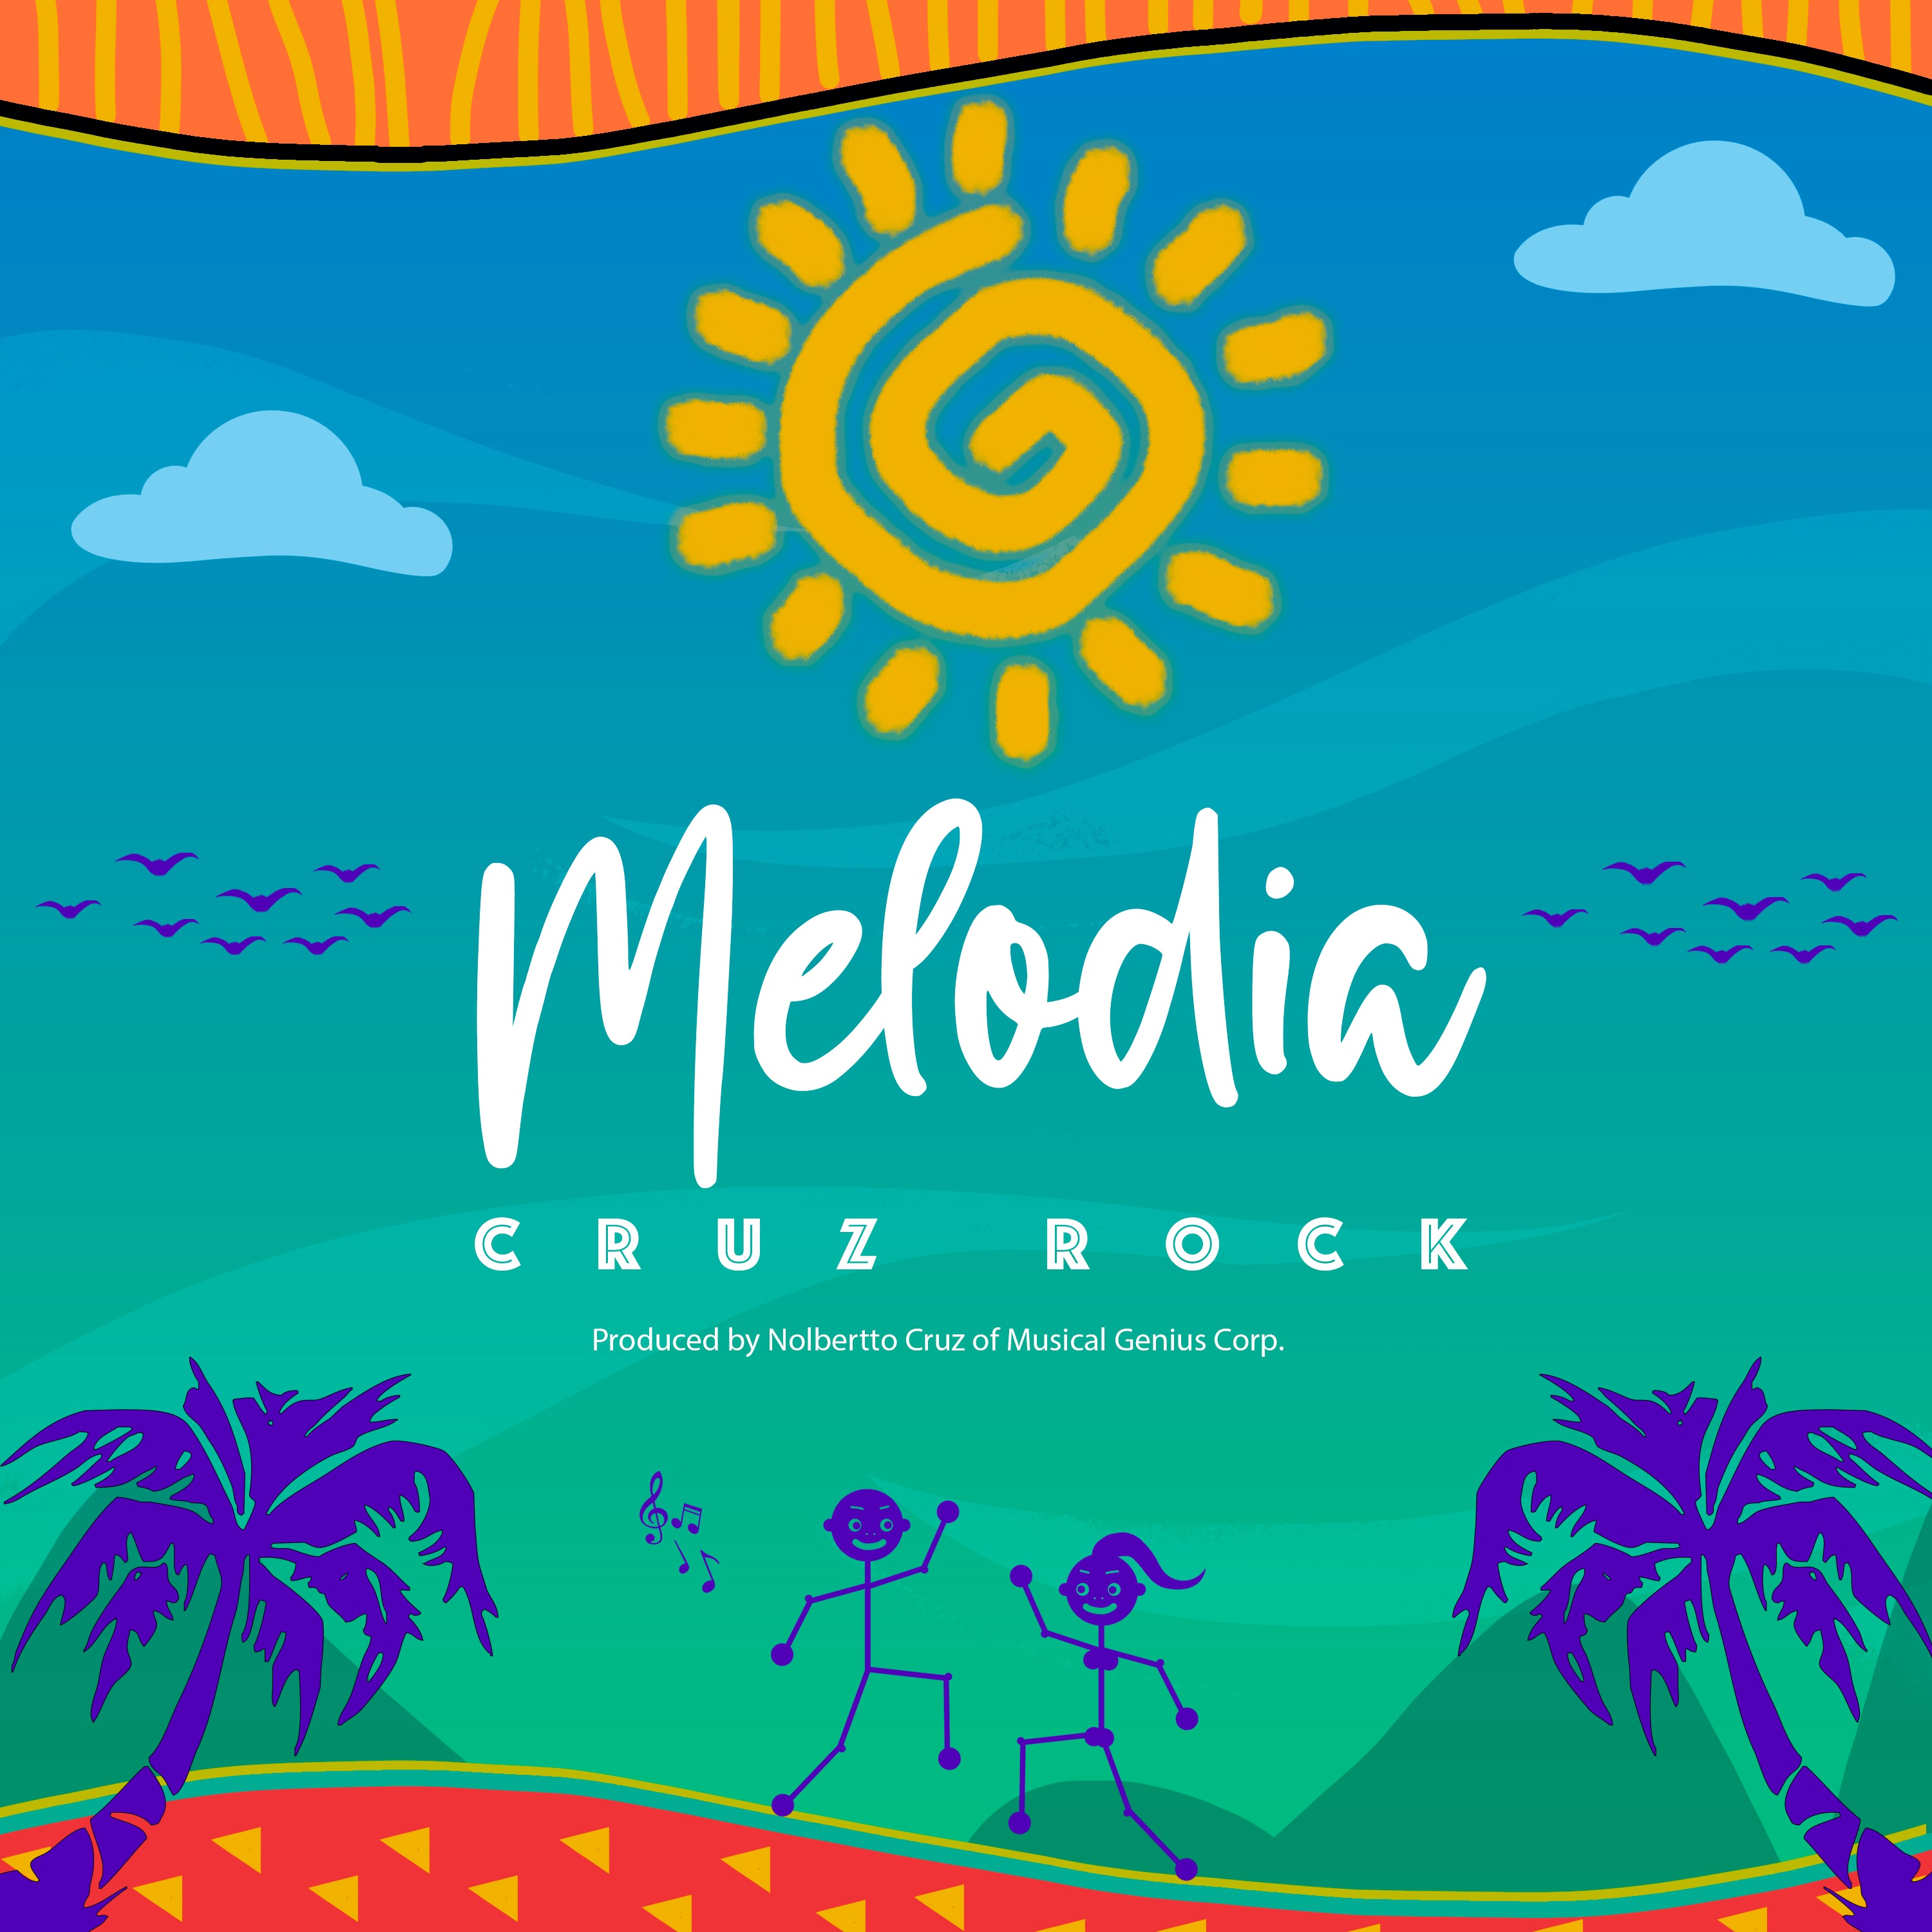 Khuphela Melodia by Cruz Rock